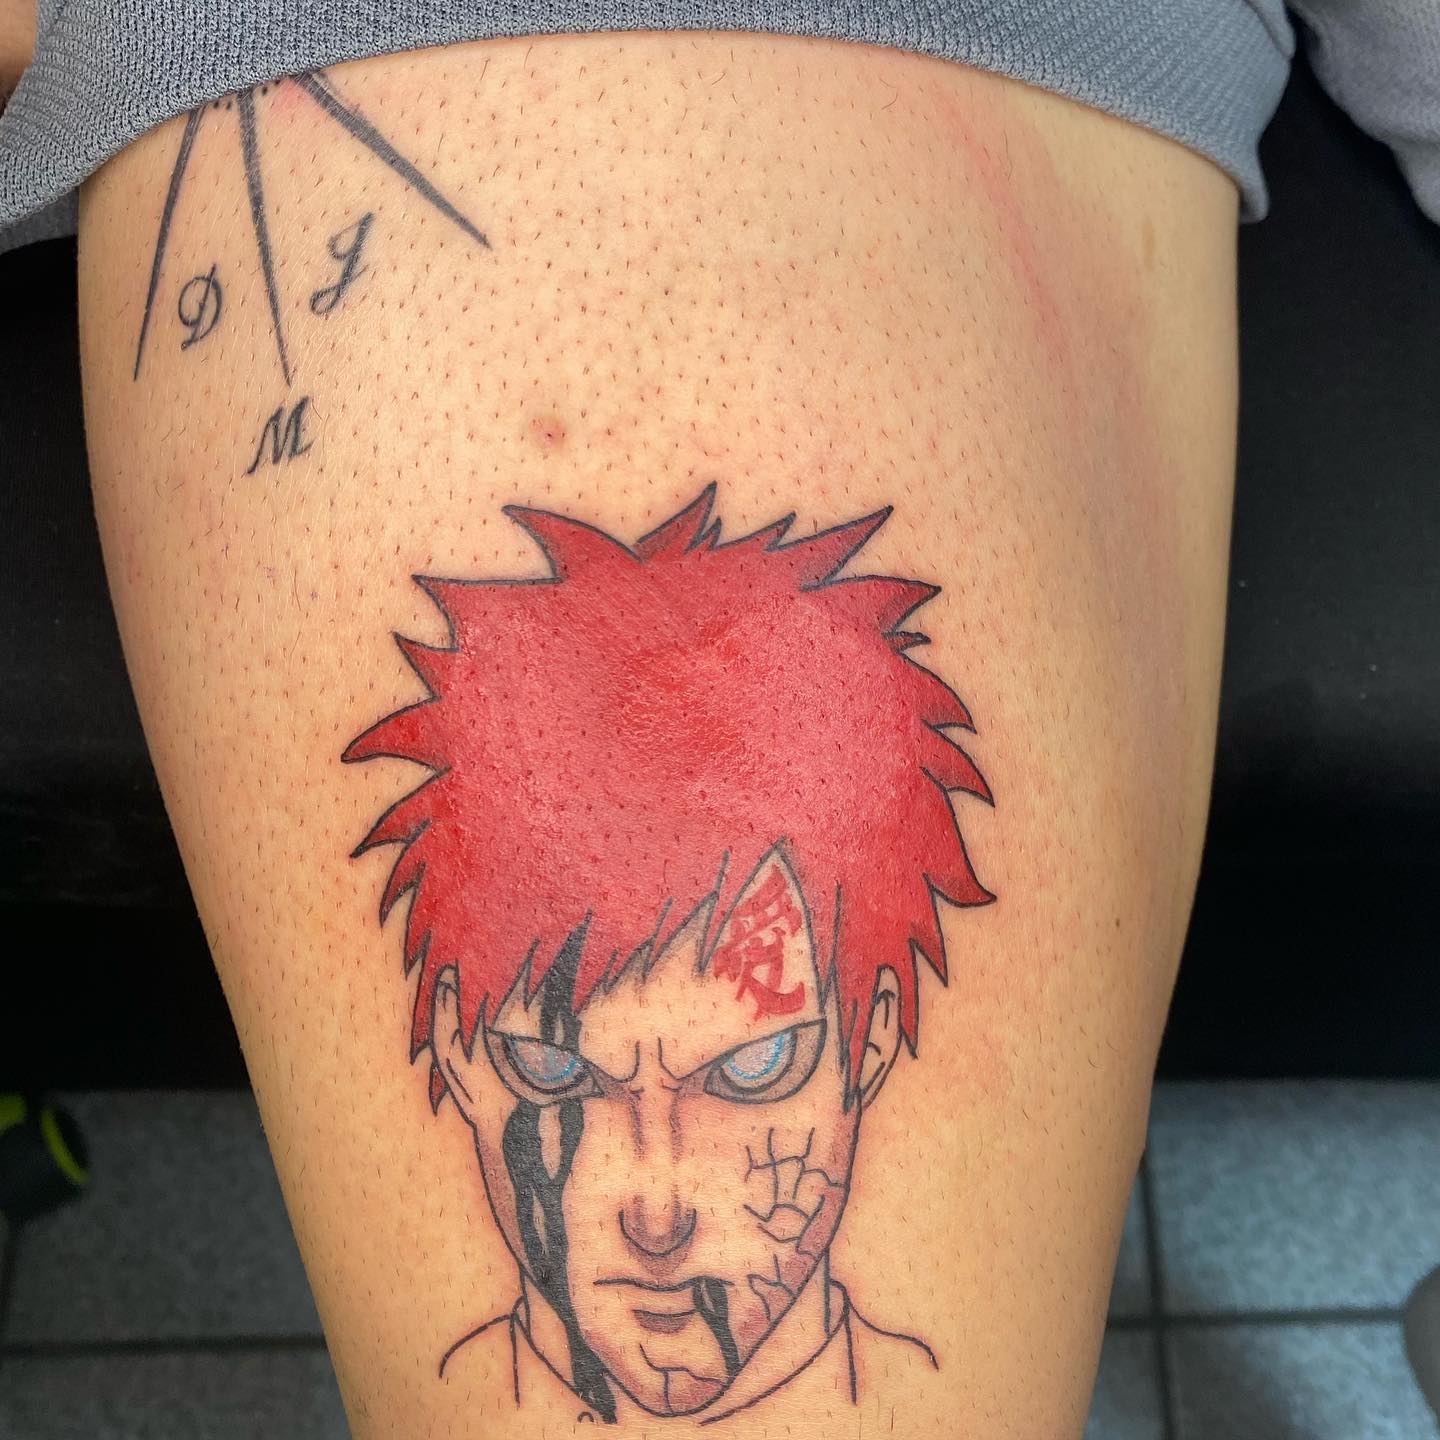 Tatuaje de Gaara con tinta roja.